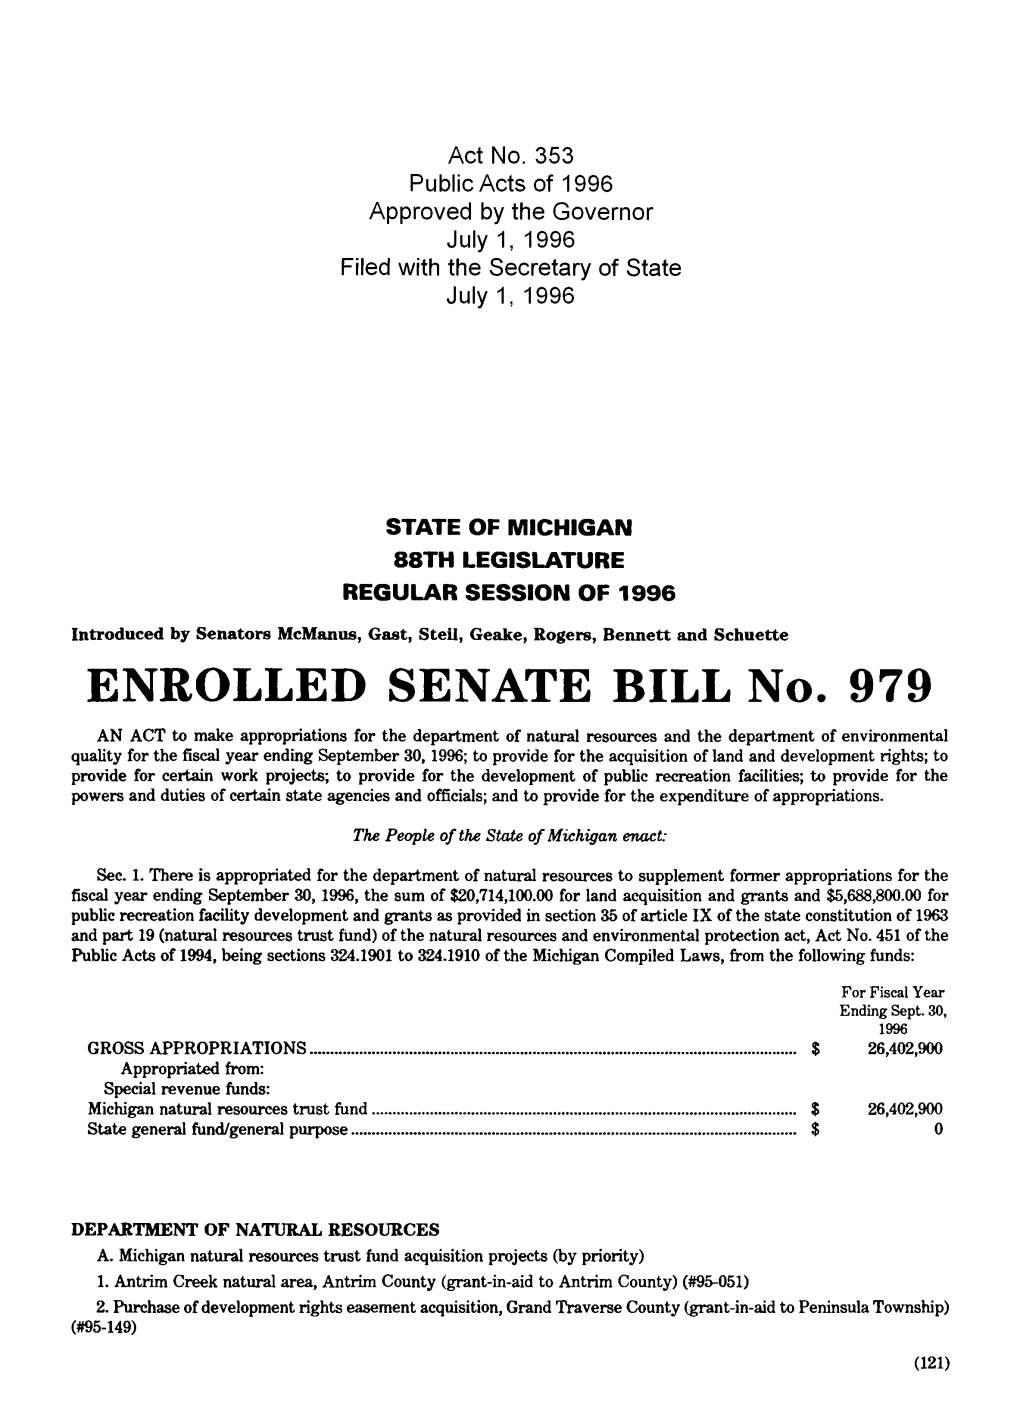 Senate Enrolled Bill